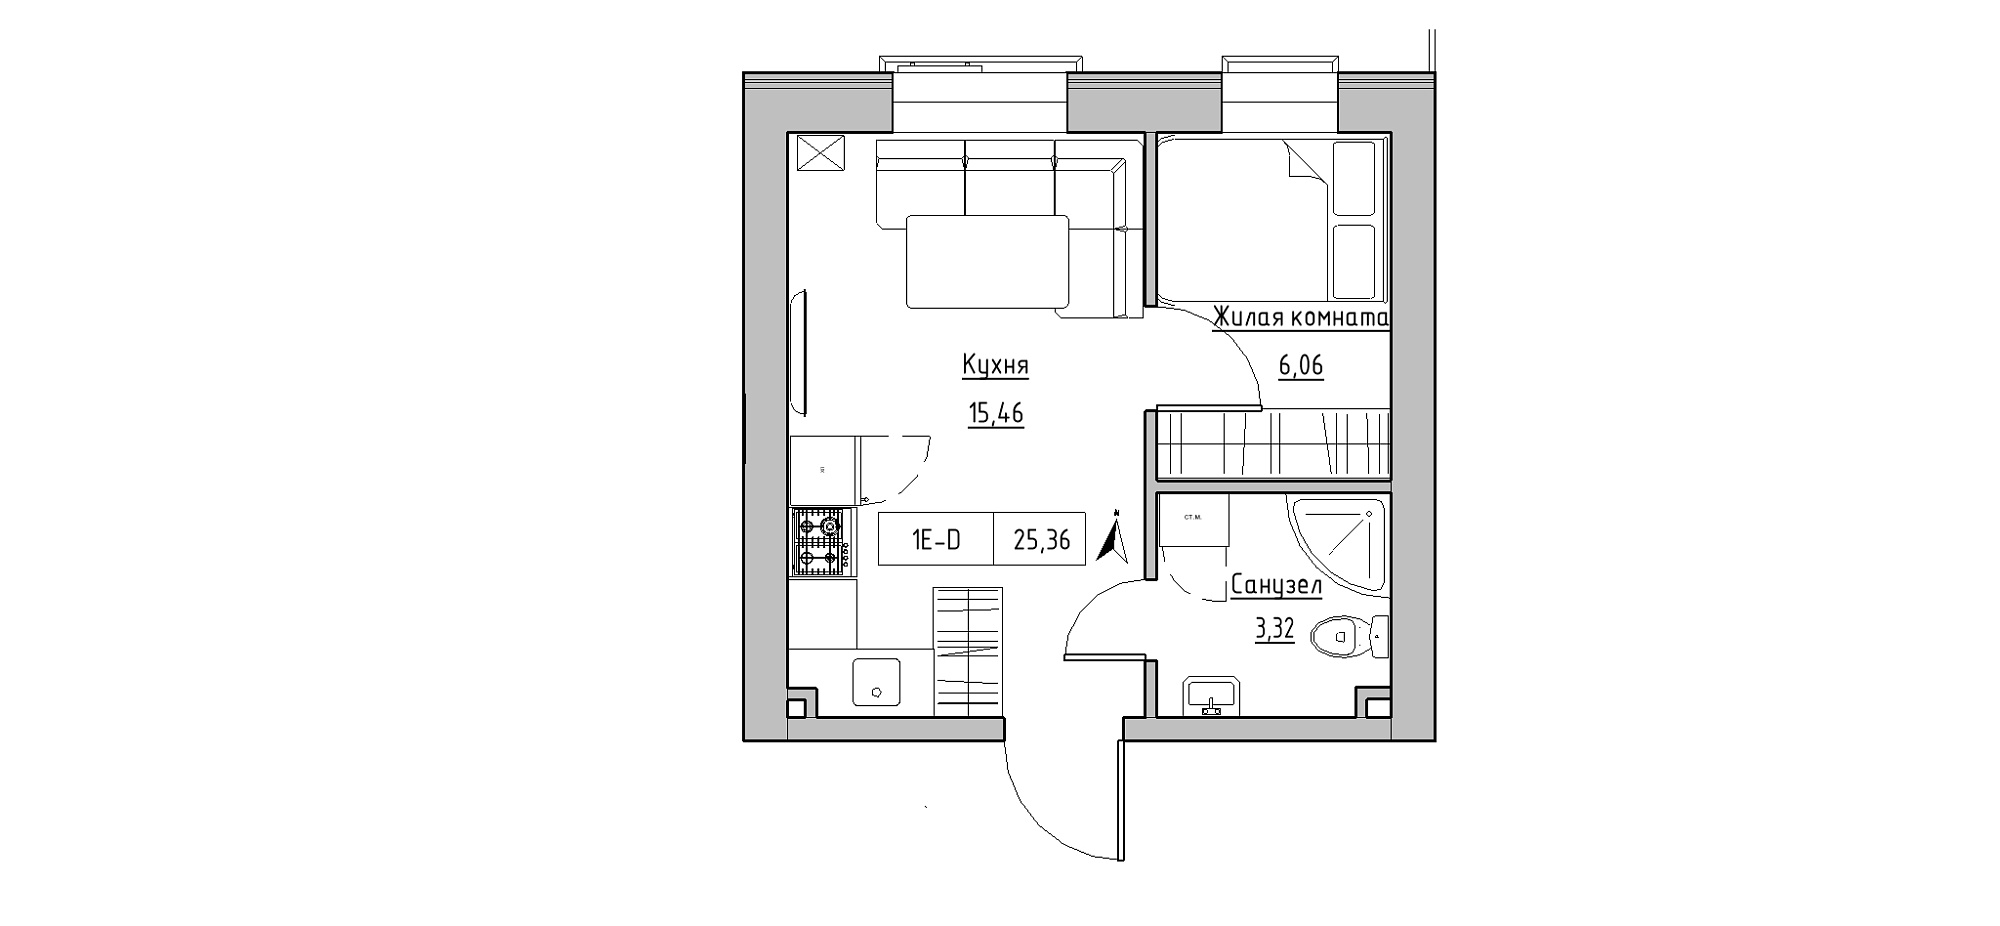 Planning 1-rm flats area 25.36m2, KS-020-03/0002.